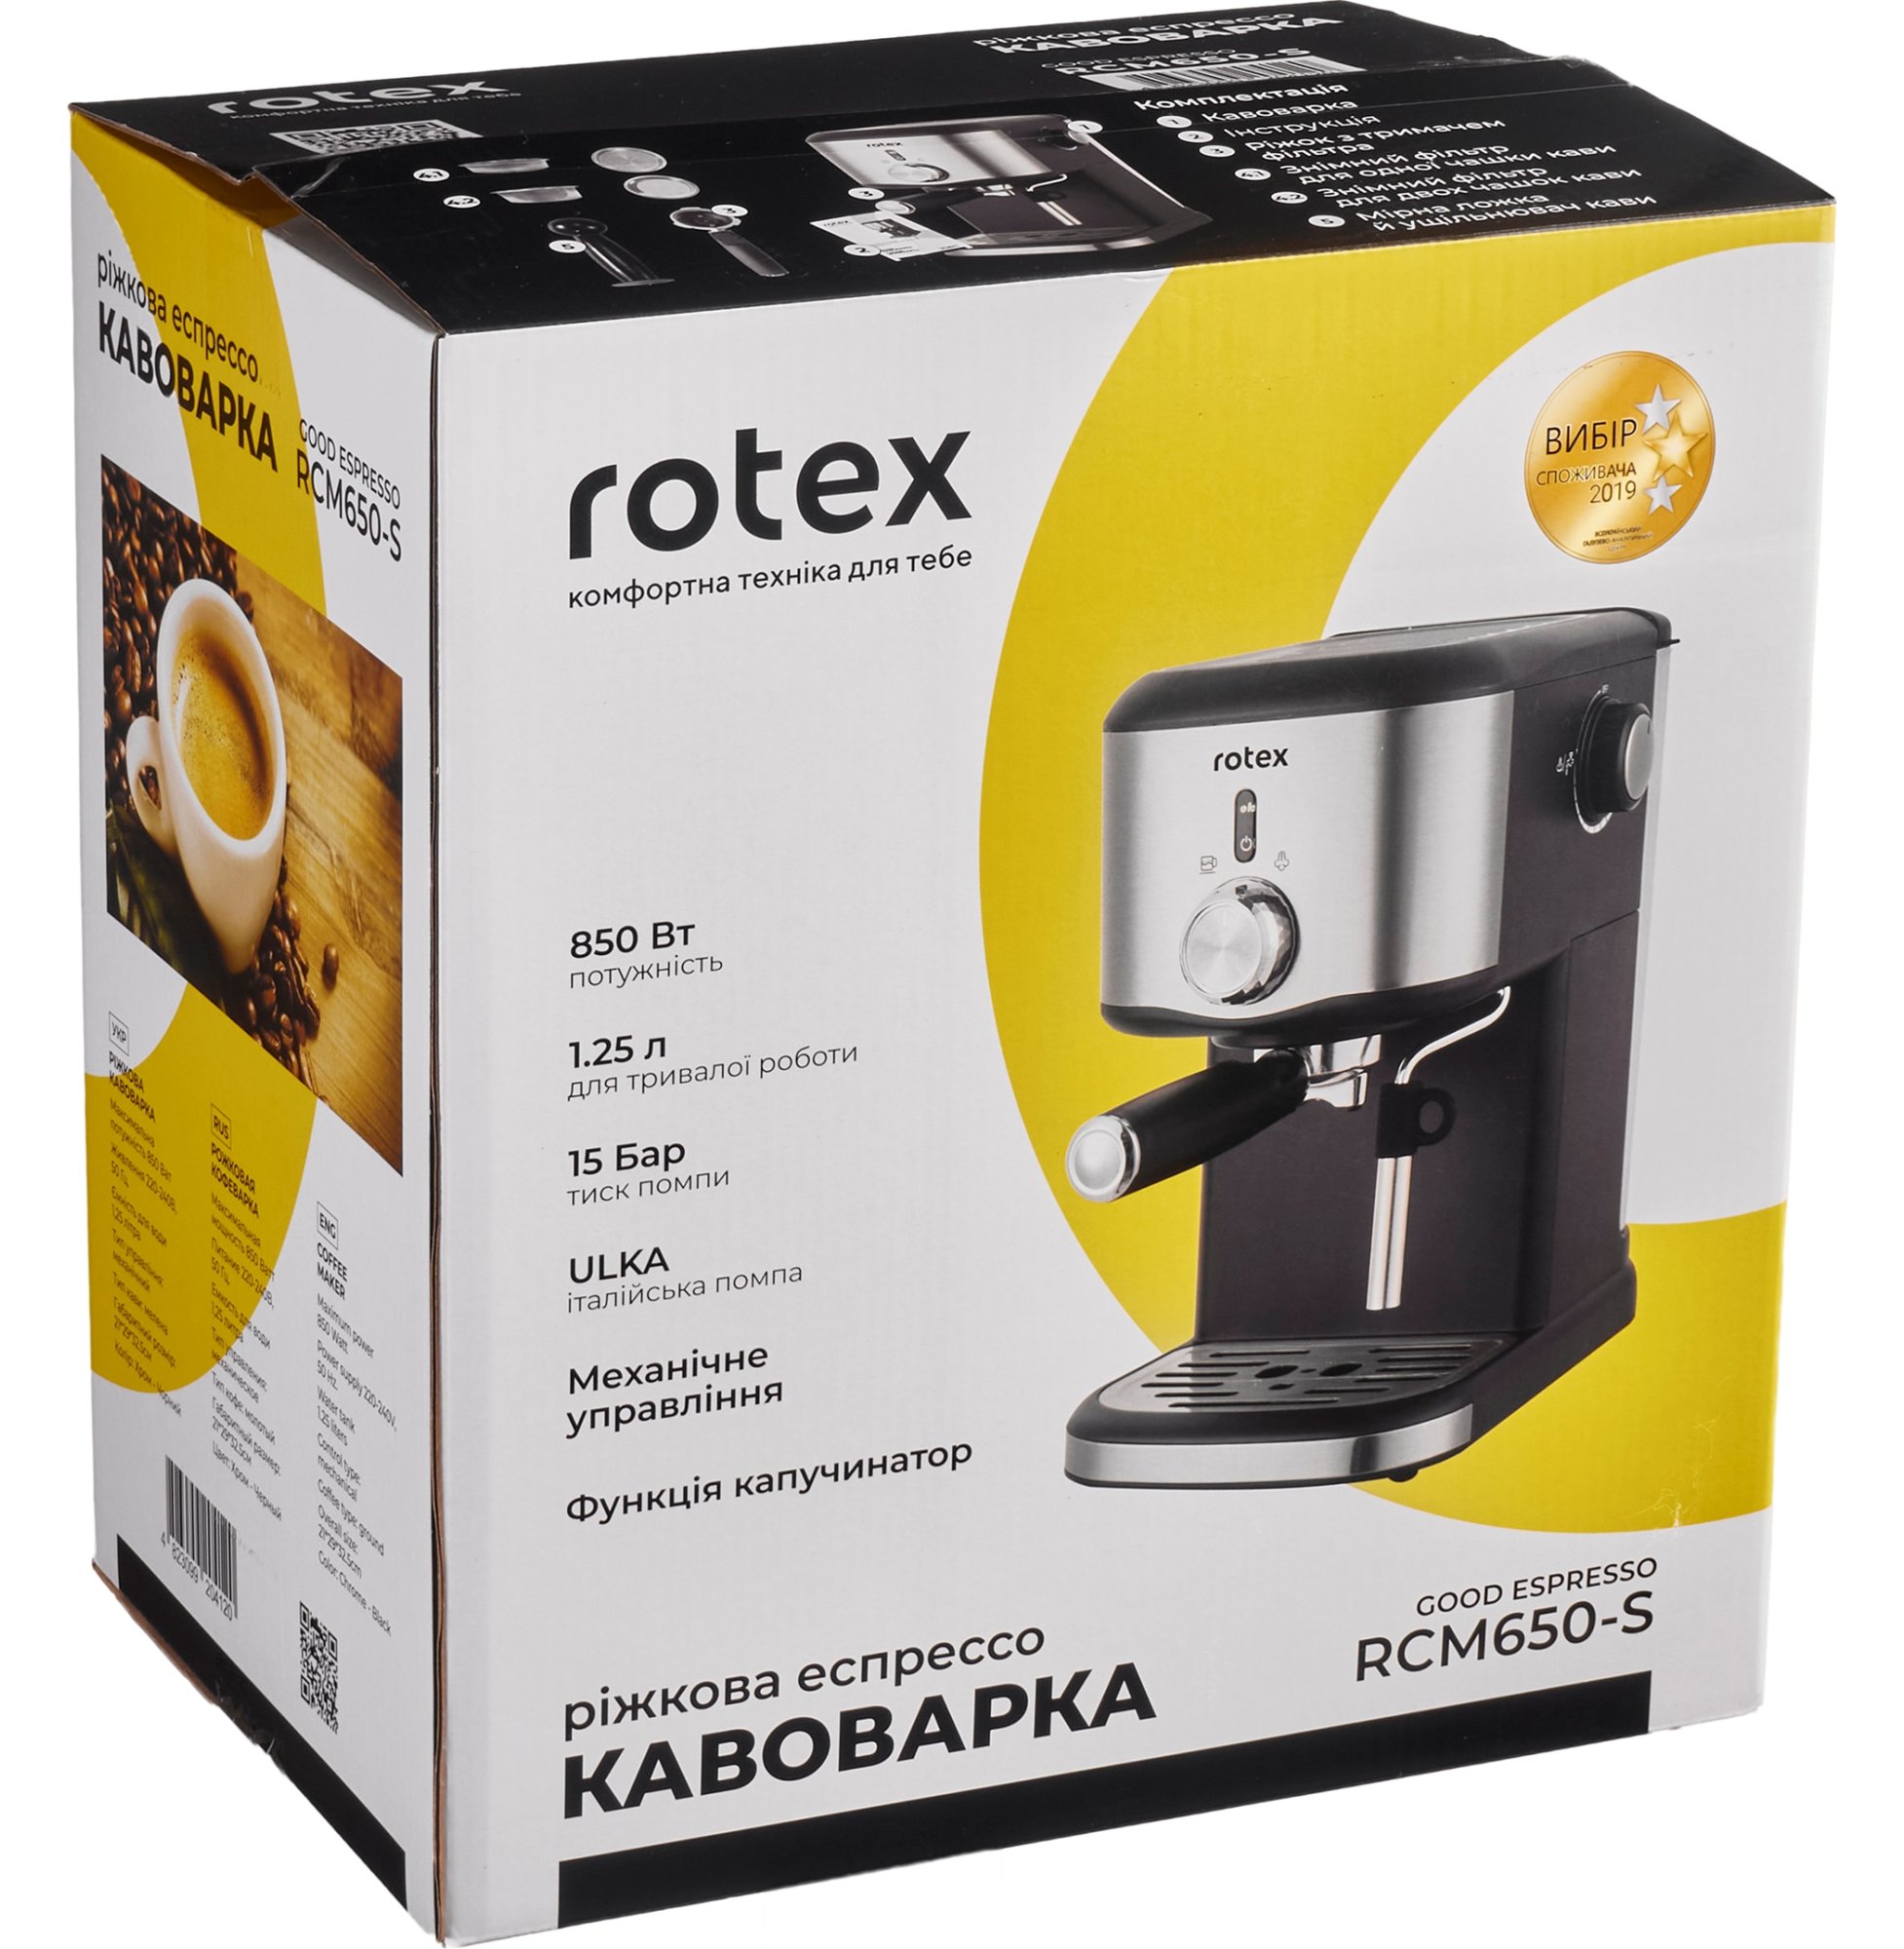 Кофеварка Rotex RCM650-S Good Espresso характеристики - фотография 7